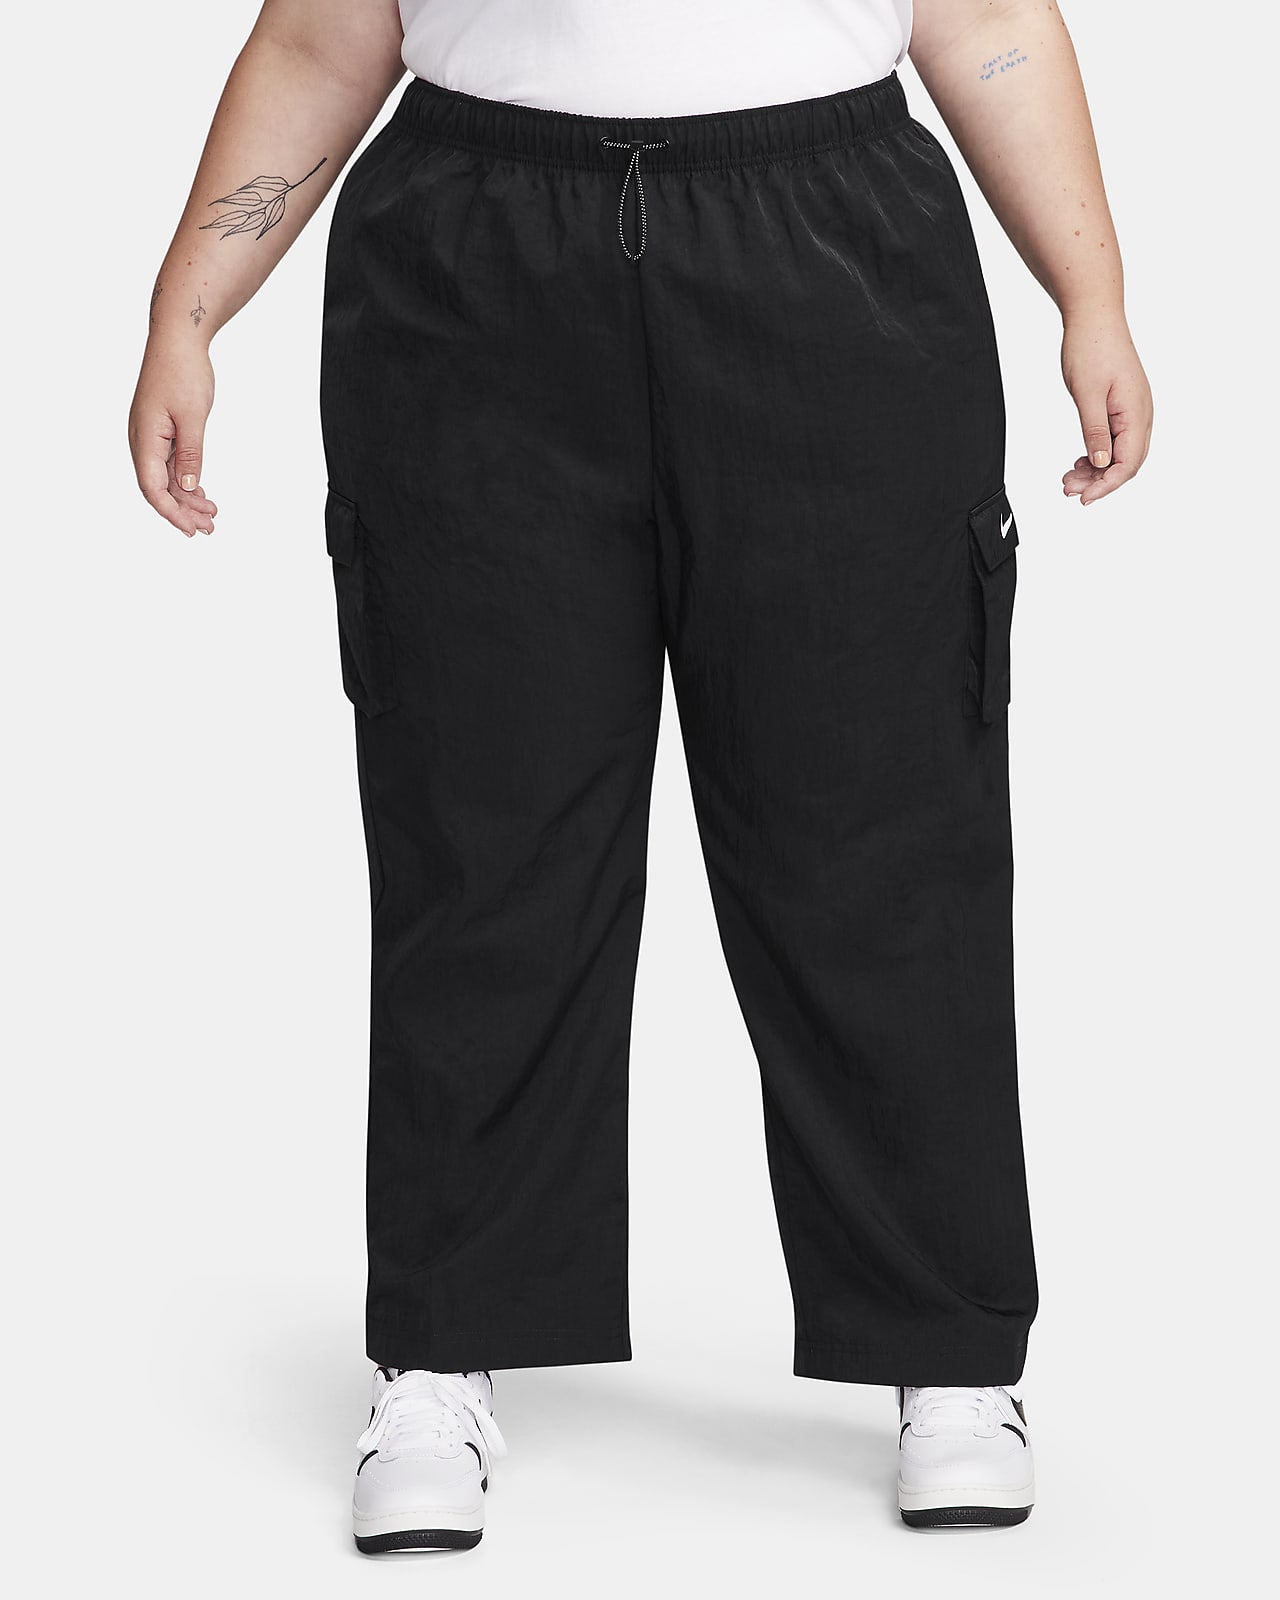 Pantalon cargo tissé taille haute Nike Sportswear Essential pour femme (grande taille)